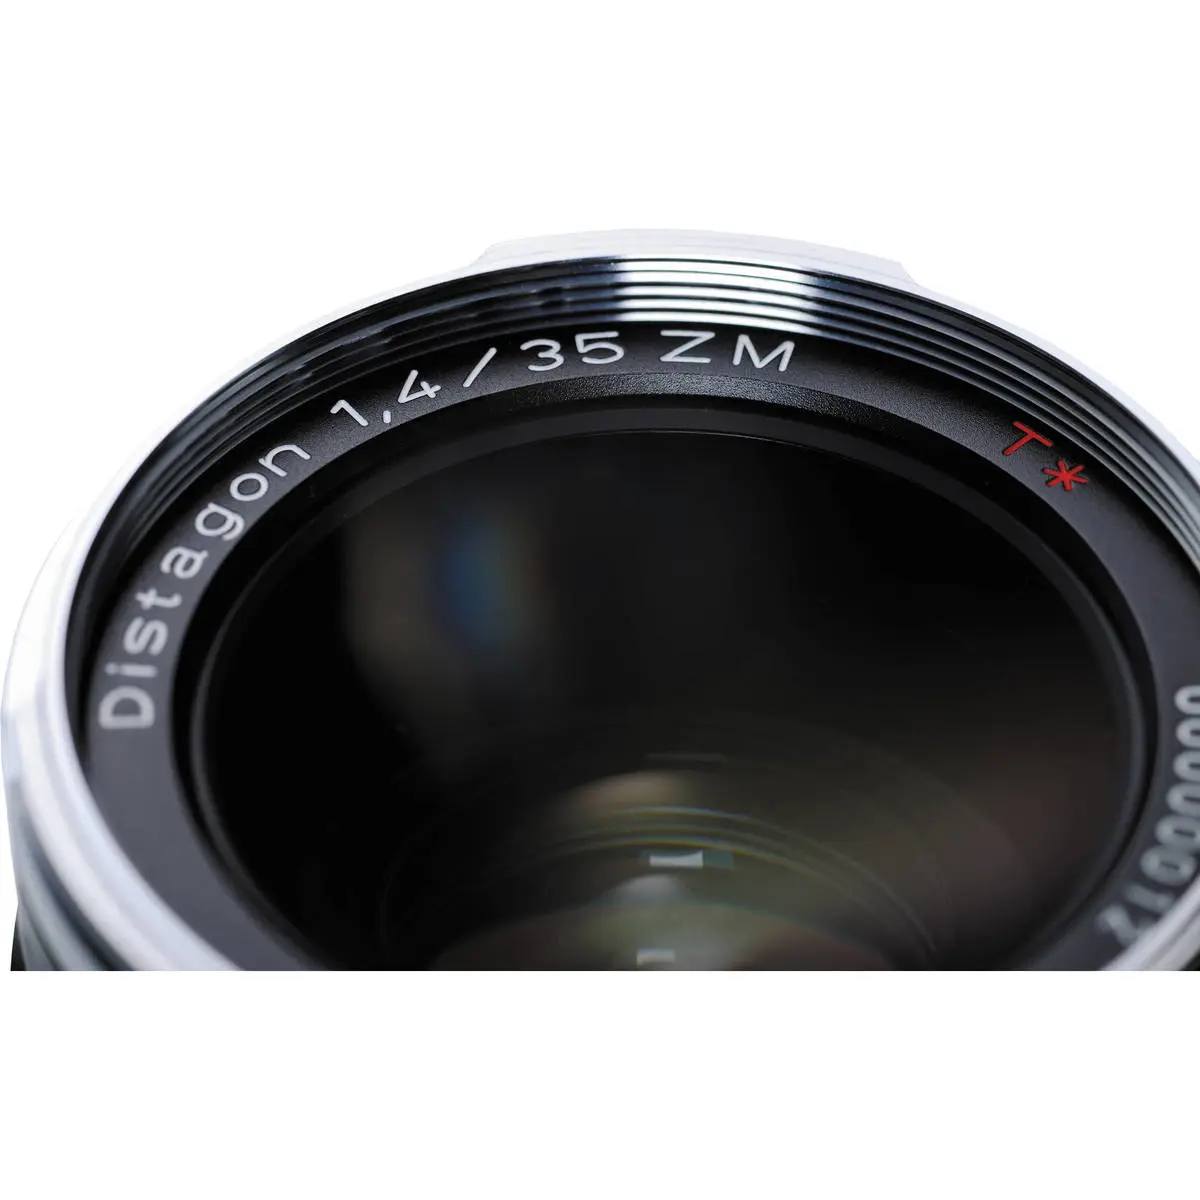 3. Carl Zeiss Distagon T* 35mm f/1.4 ZM Lens (Black) Lens